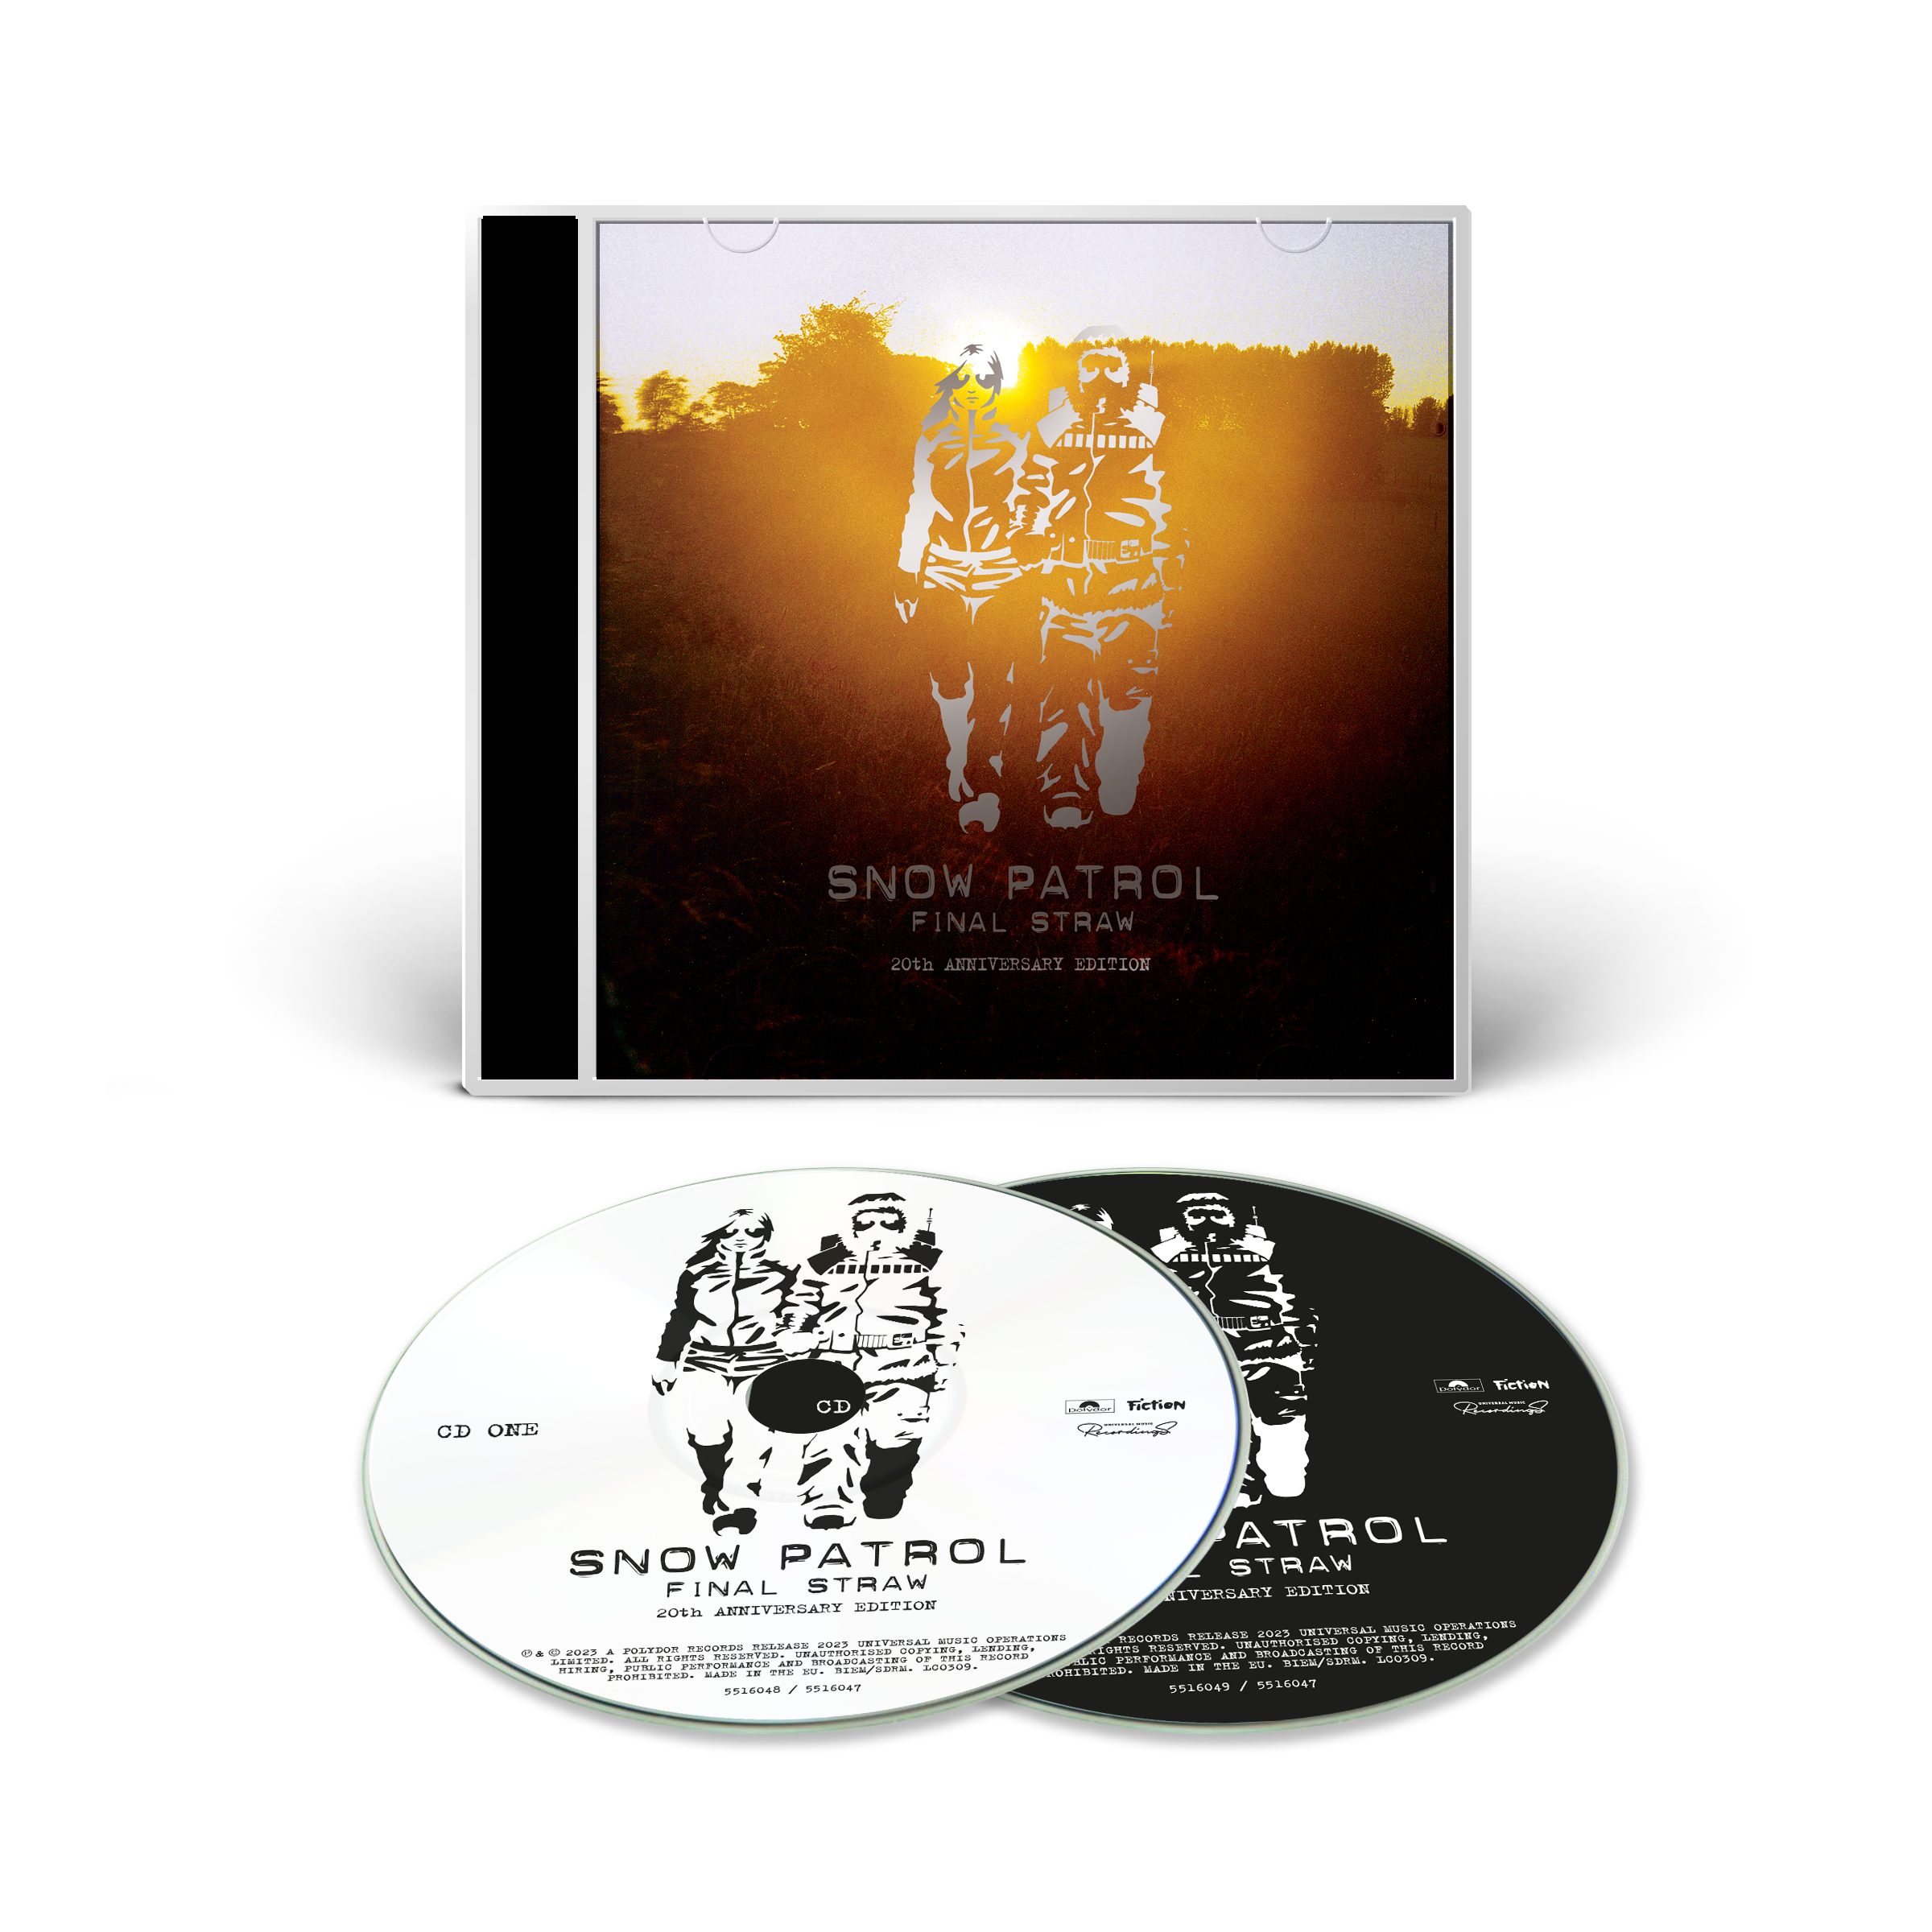 Snow Patrol - Final Straw (20th Anniversary Edition) 2CD.